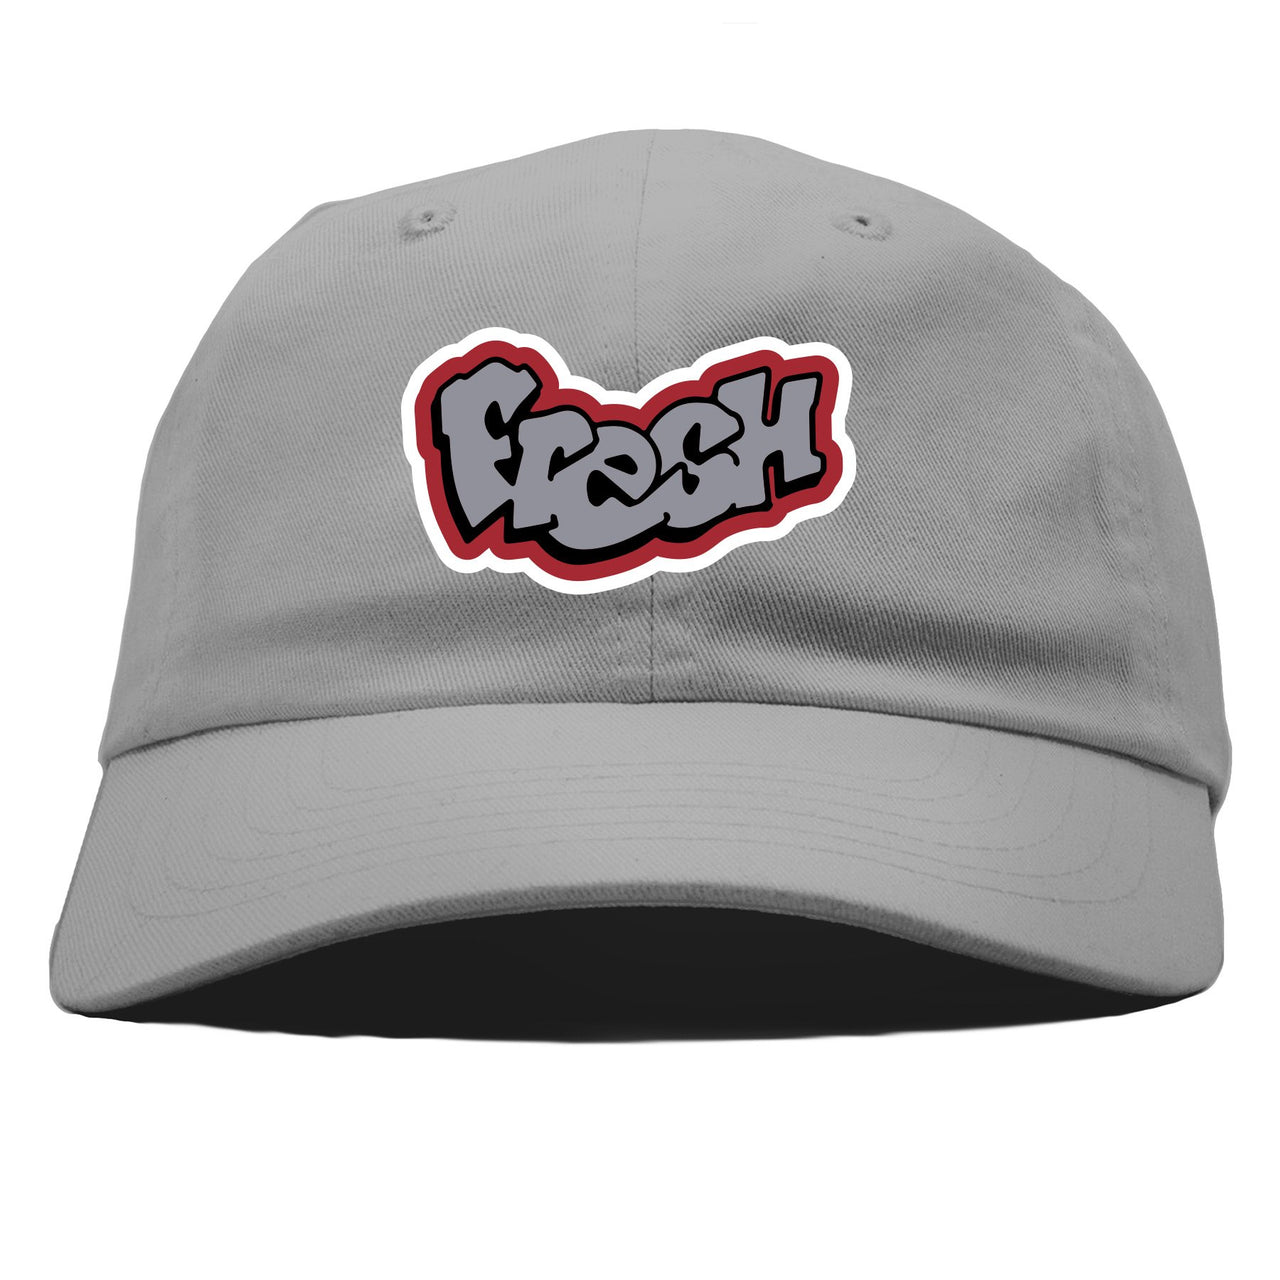 Bred 2019 4s Dad Hat | Fresh Logo, Gray